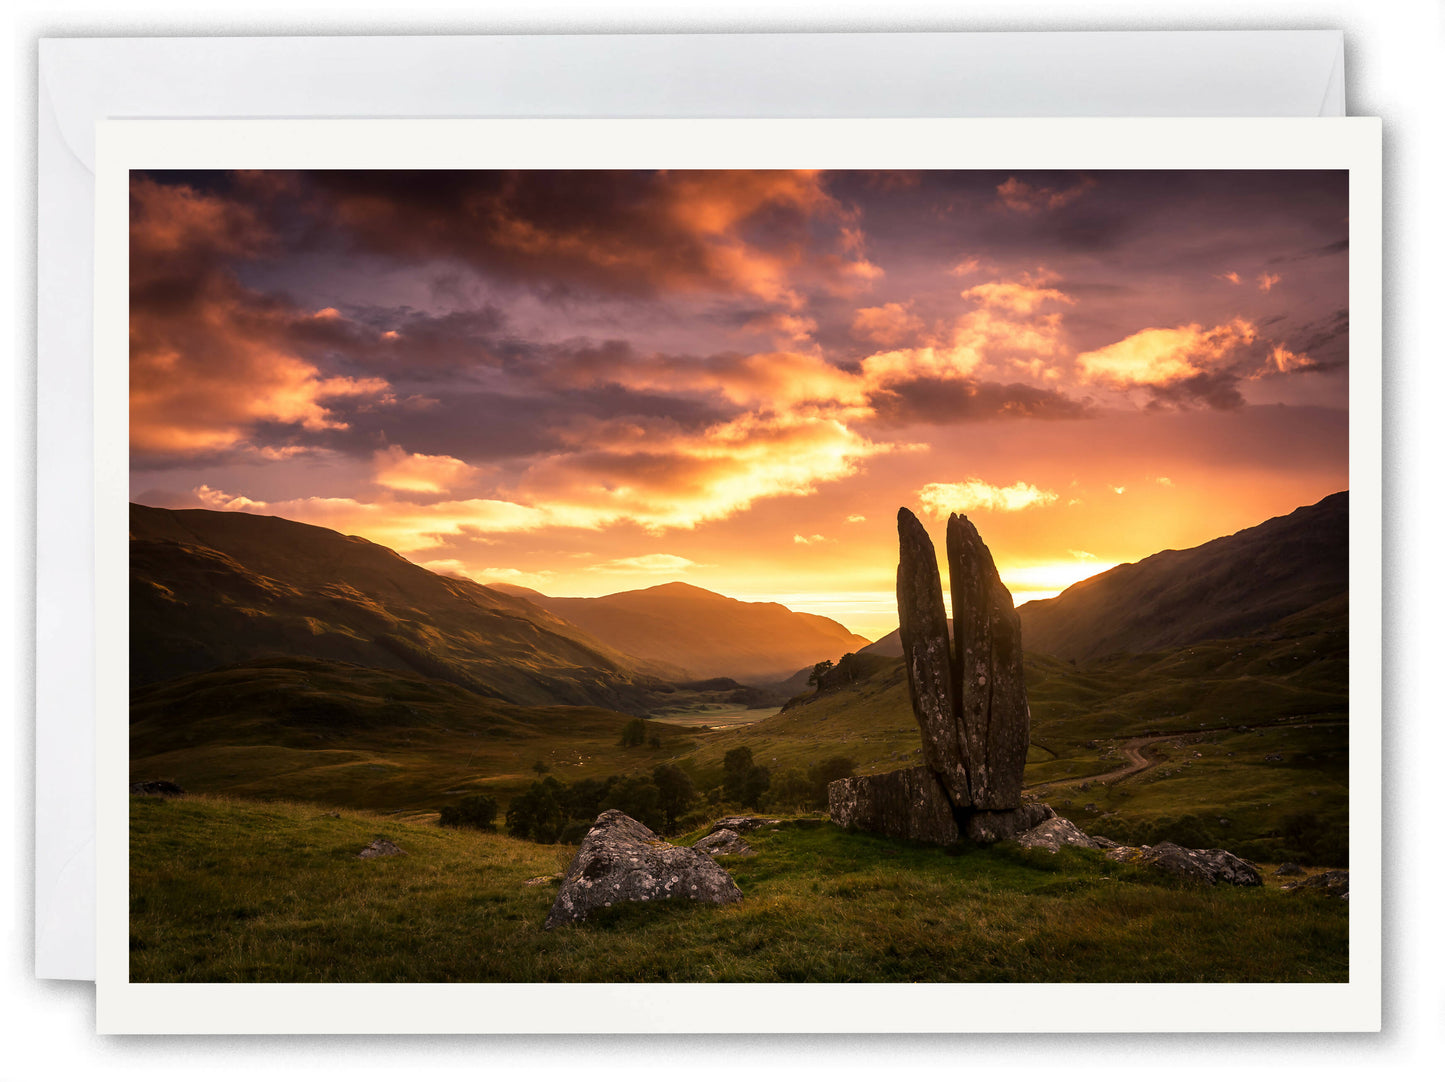 Fionn's Rock, Glen Lyon - Scotland Greeting Card - Blank Inside